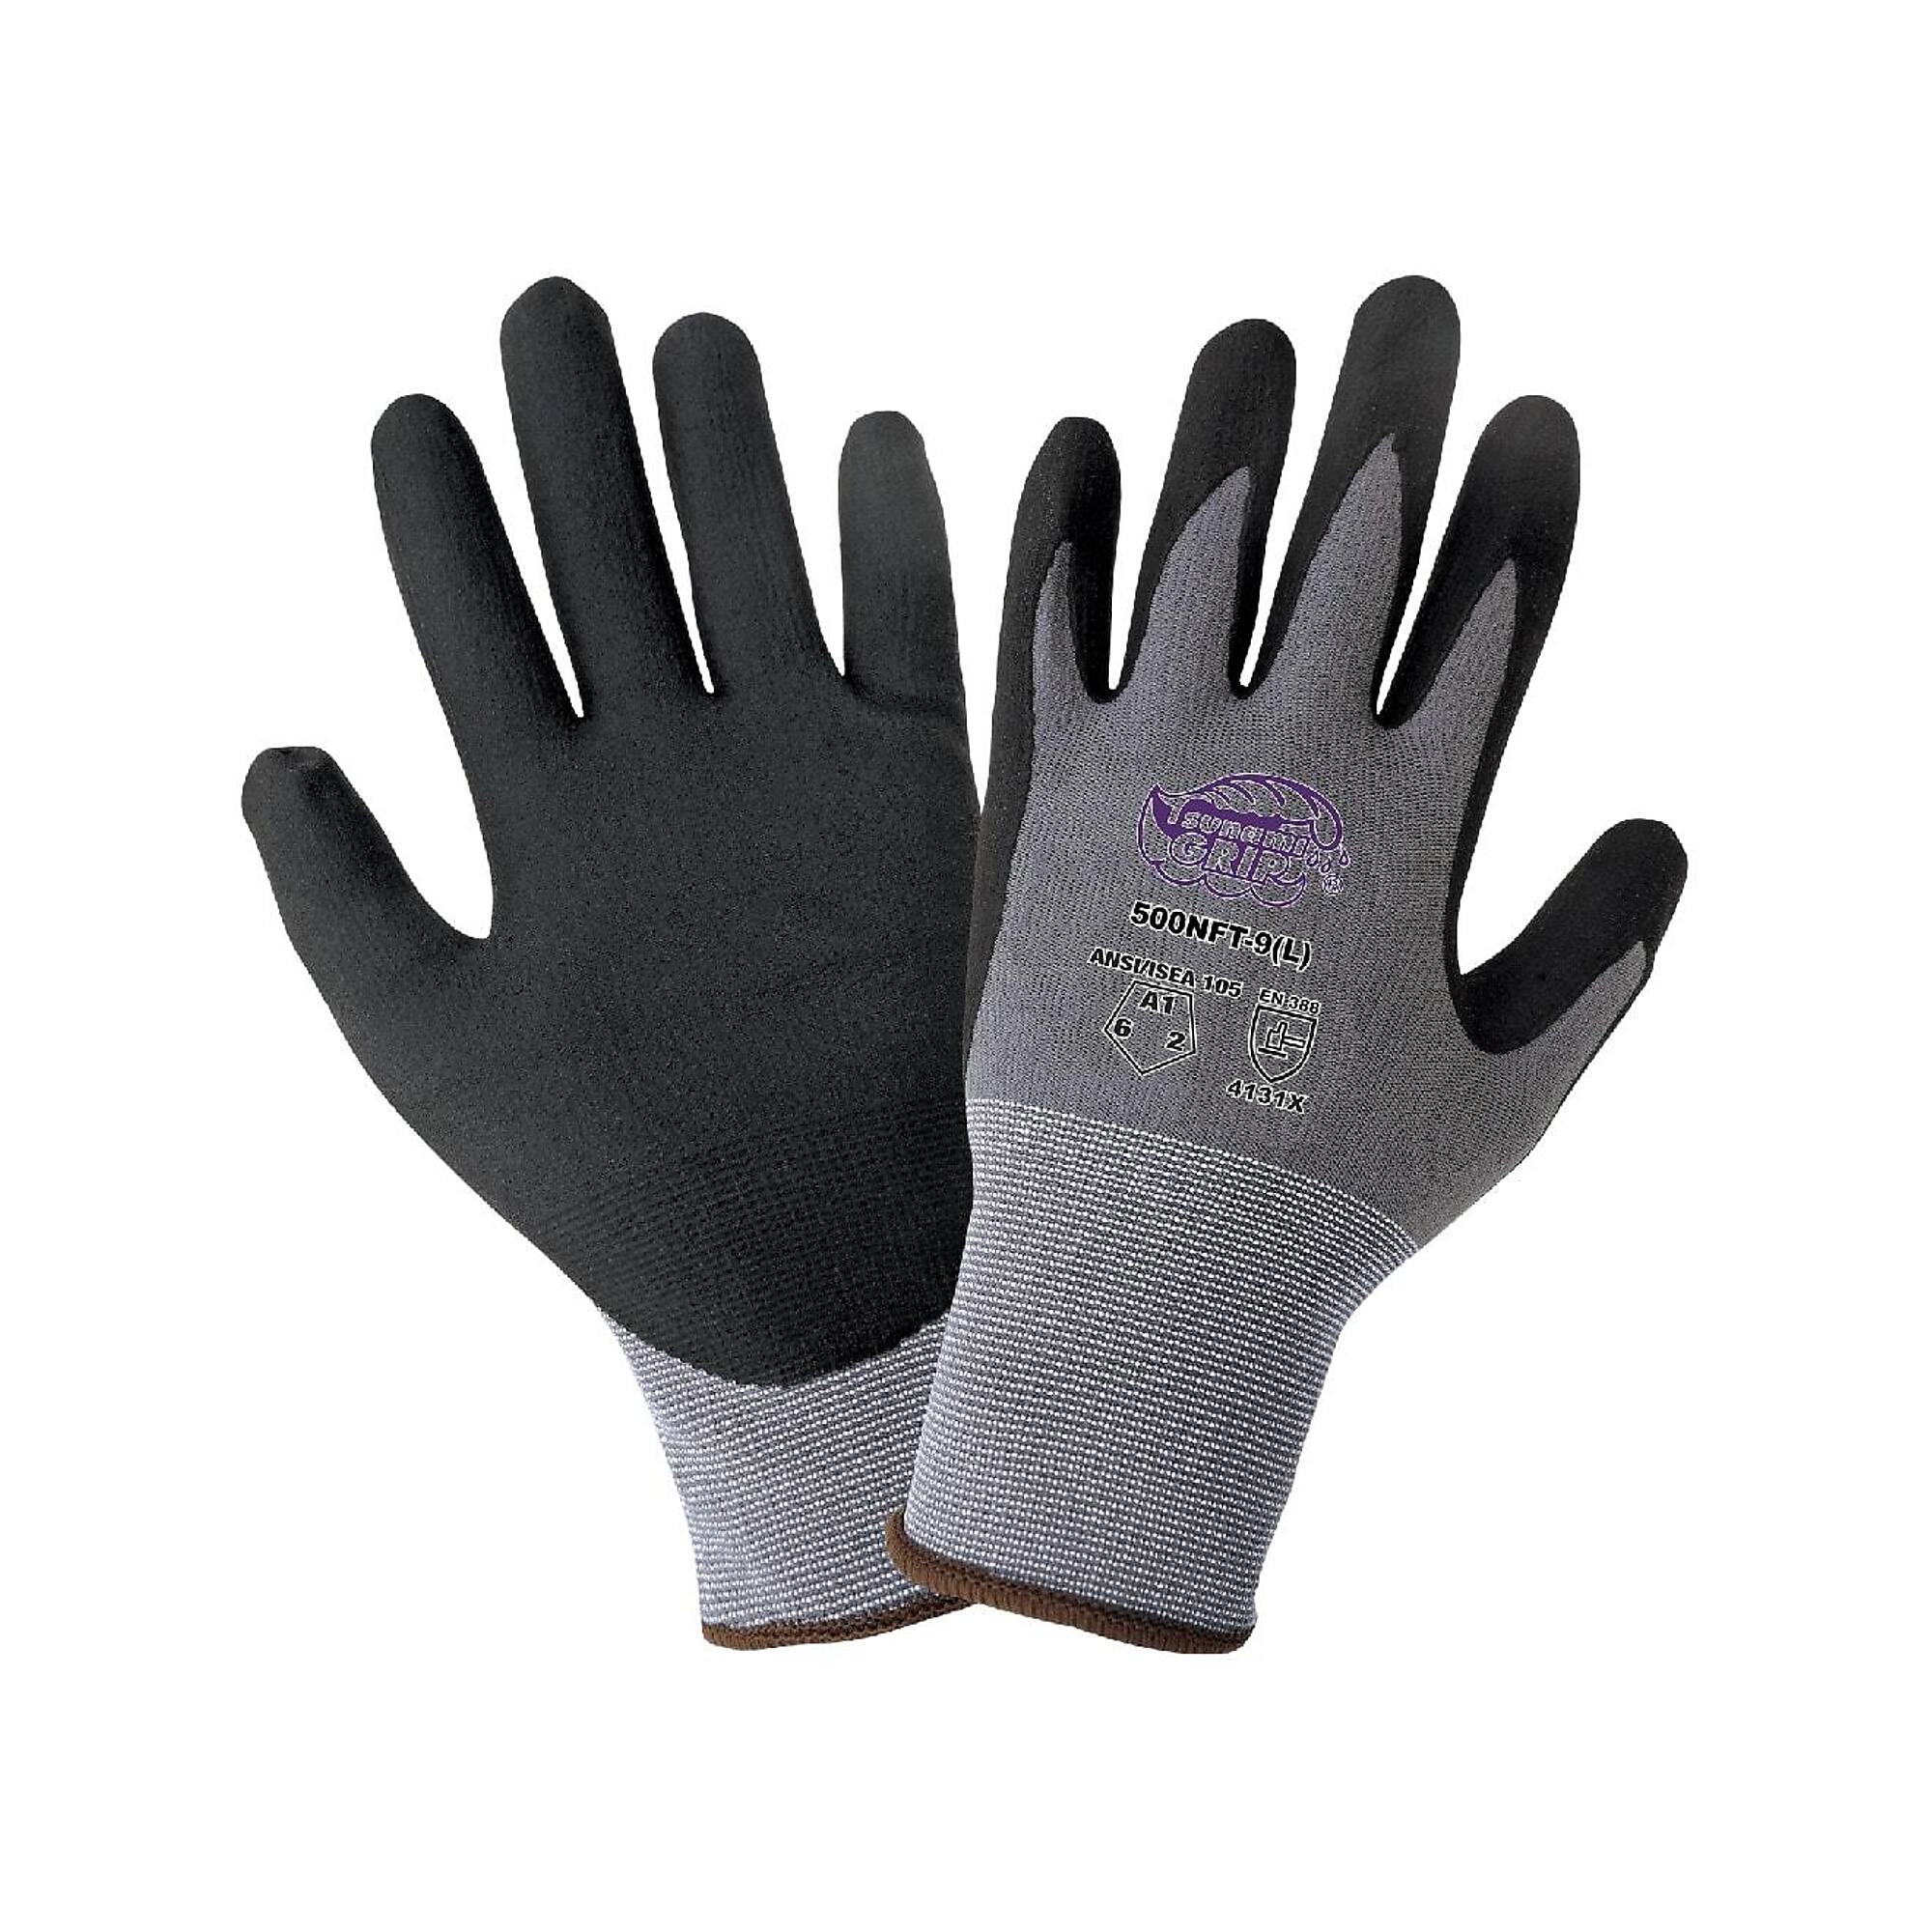 Global Glove Tsunami Grip , Gray, Black Nitrile Foam Palm, Cut Resist A1 Gloves- 12 Pair, Size 2XL, Color Gray/Black, Included (qty.) 12 Model 500NFT-